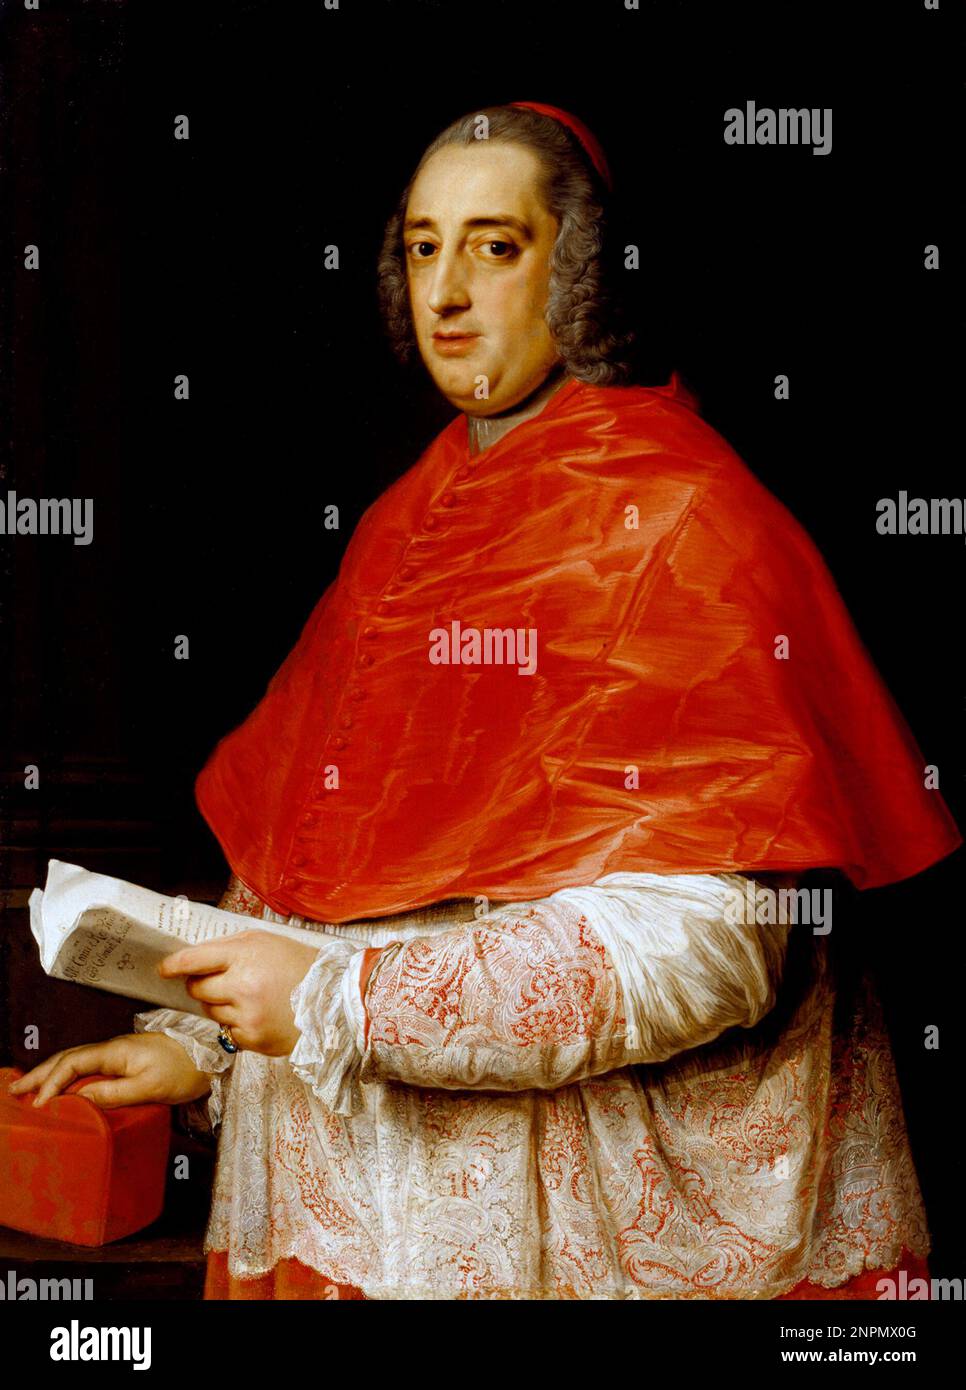 Colonna di Sciarra, Prospero Colonna di Sciarra (1707 – 1765) cardinal italien de la famille des ducs de Carbognano. Peinture de Pompeo Batoni Banque D'Images